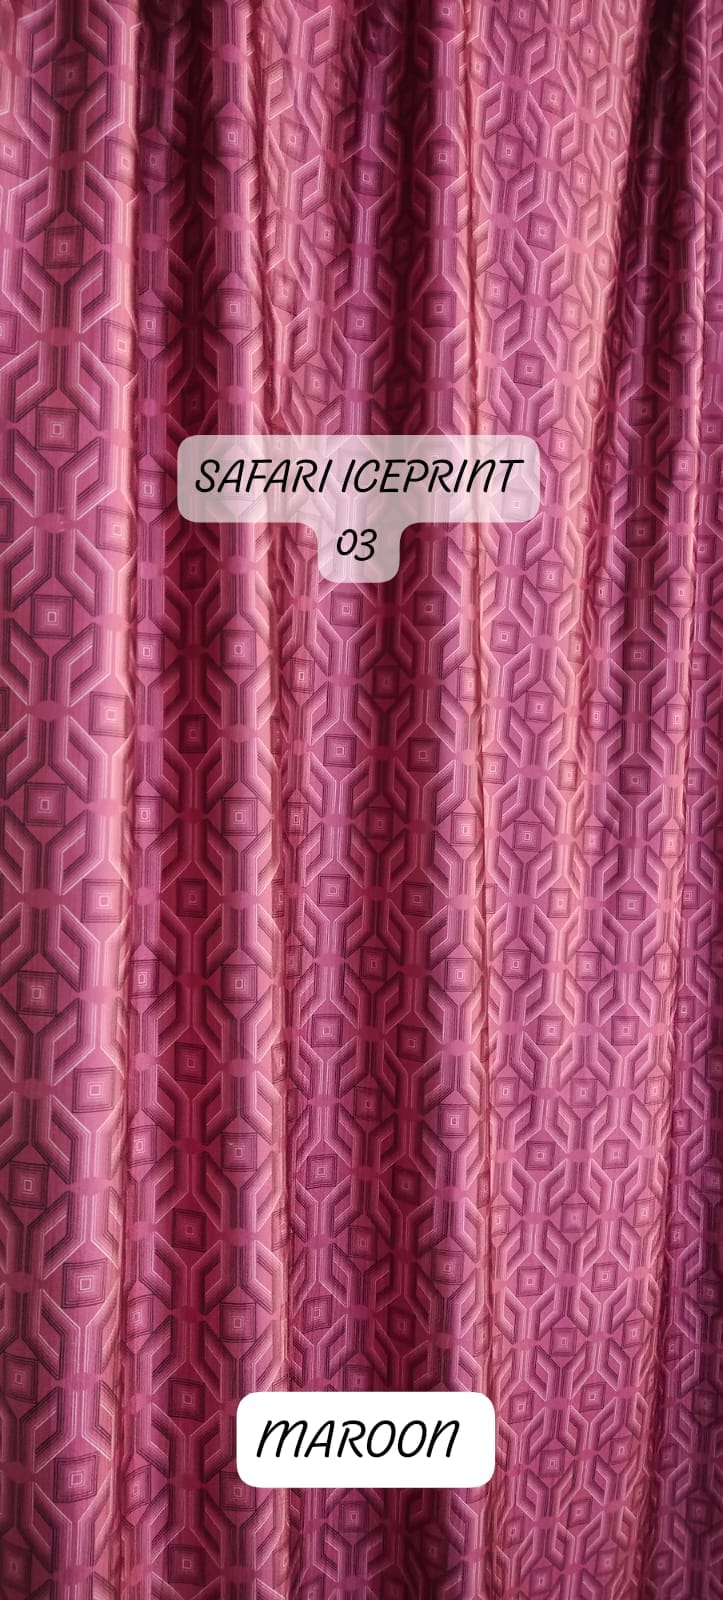 SAFARI ICEPRINT 03